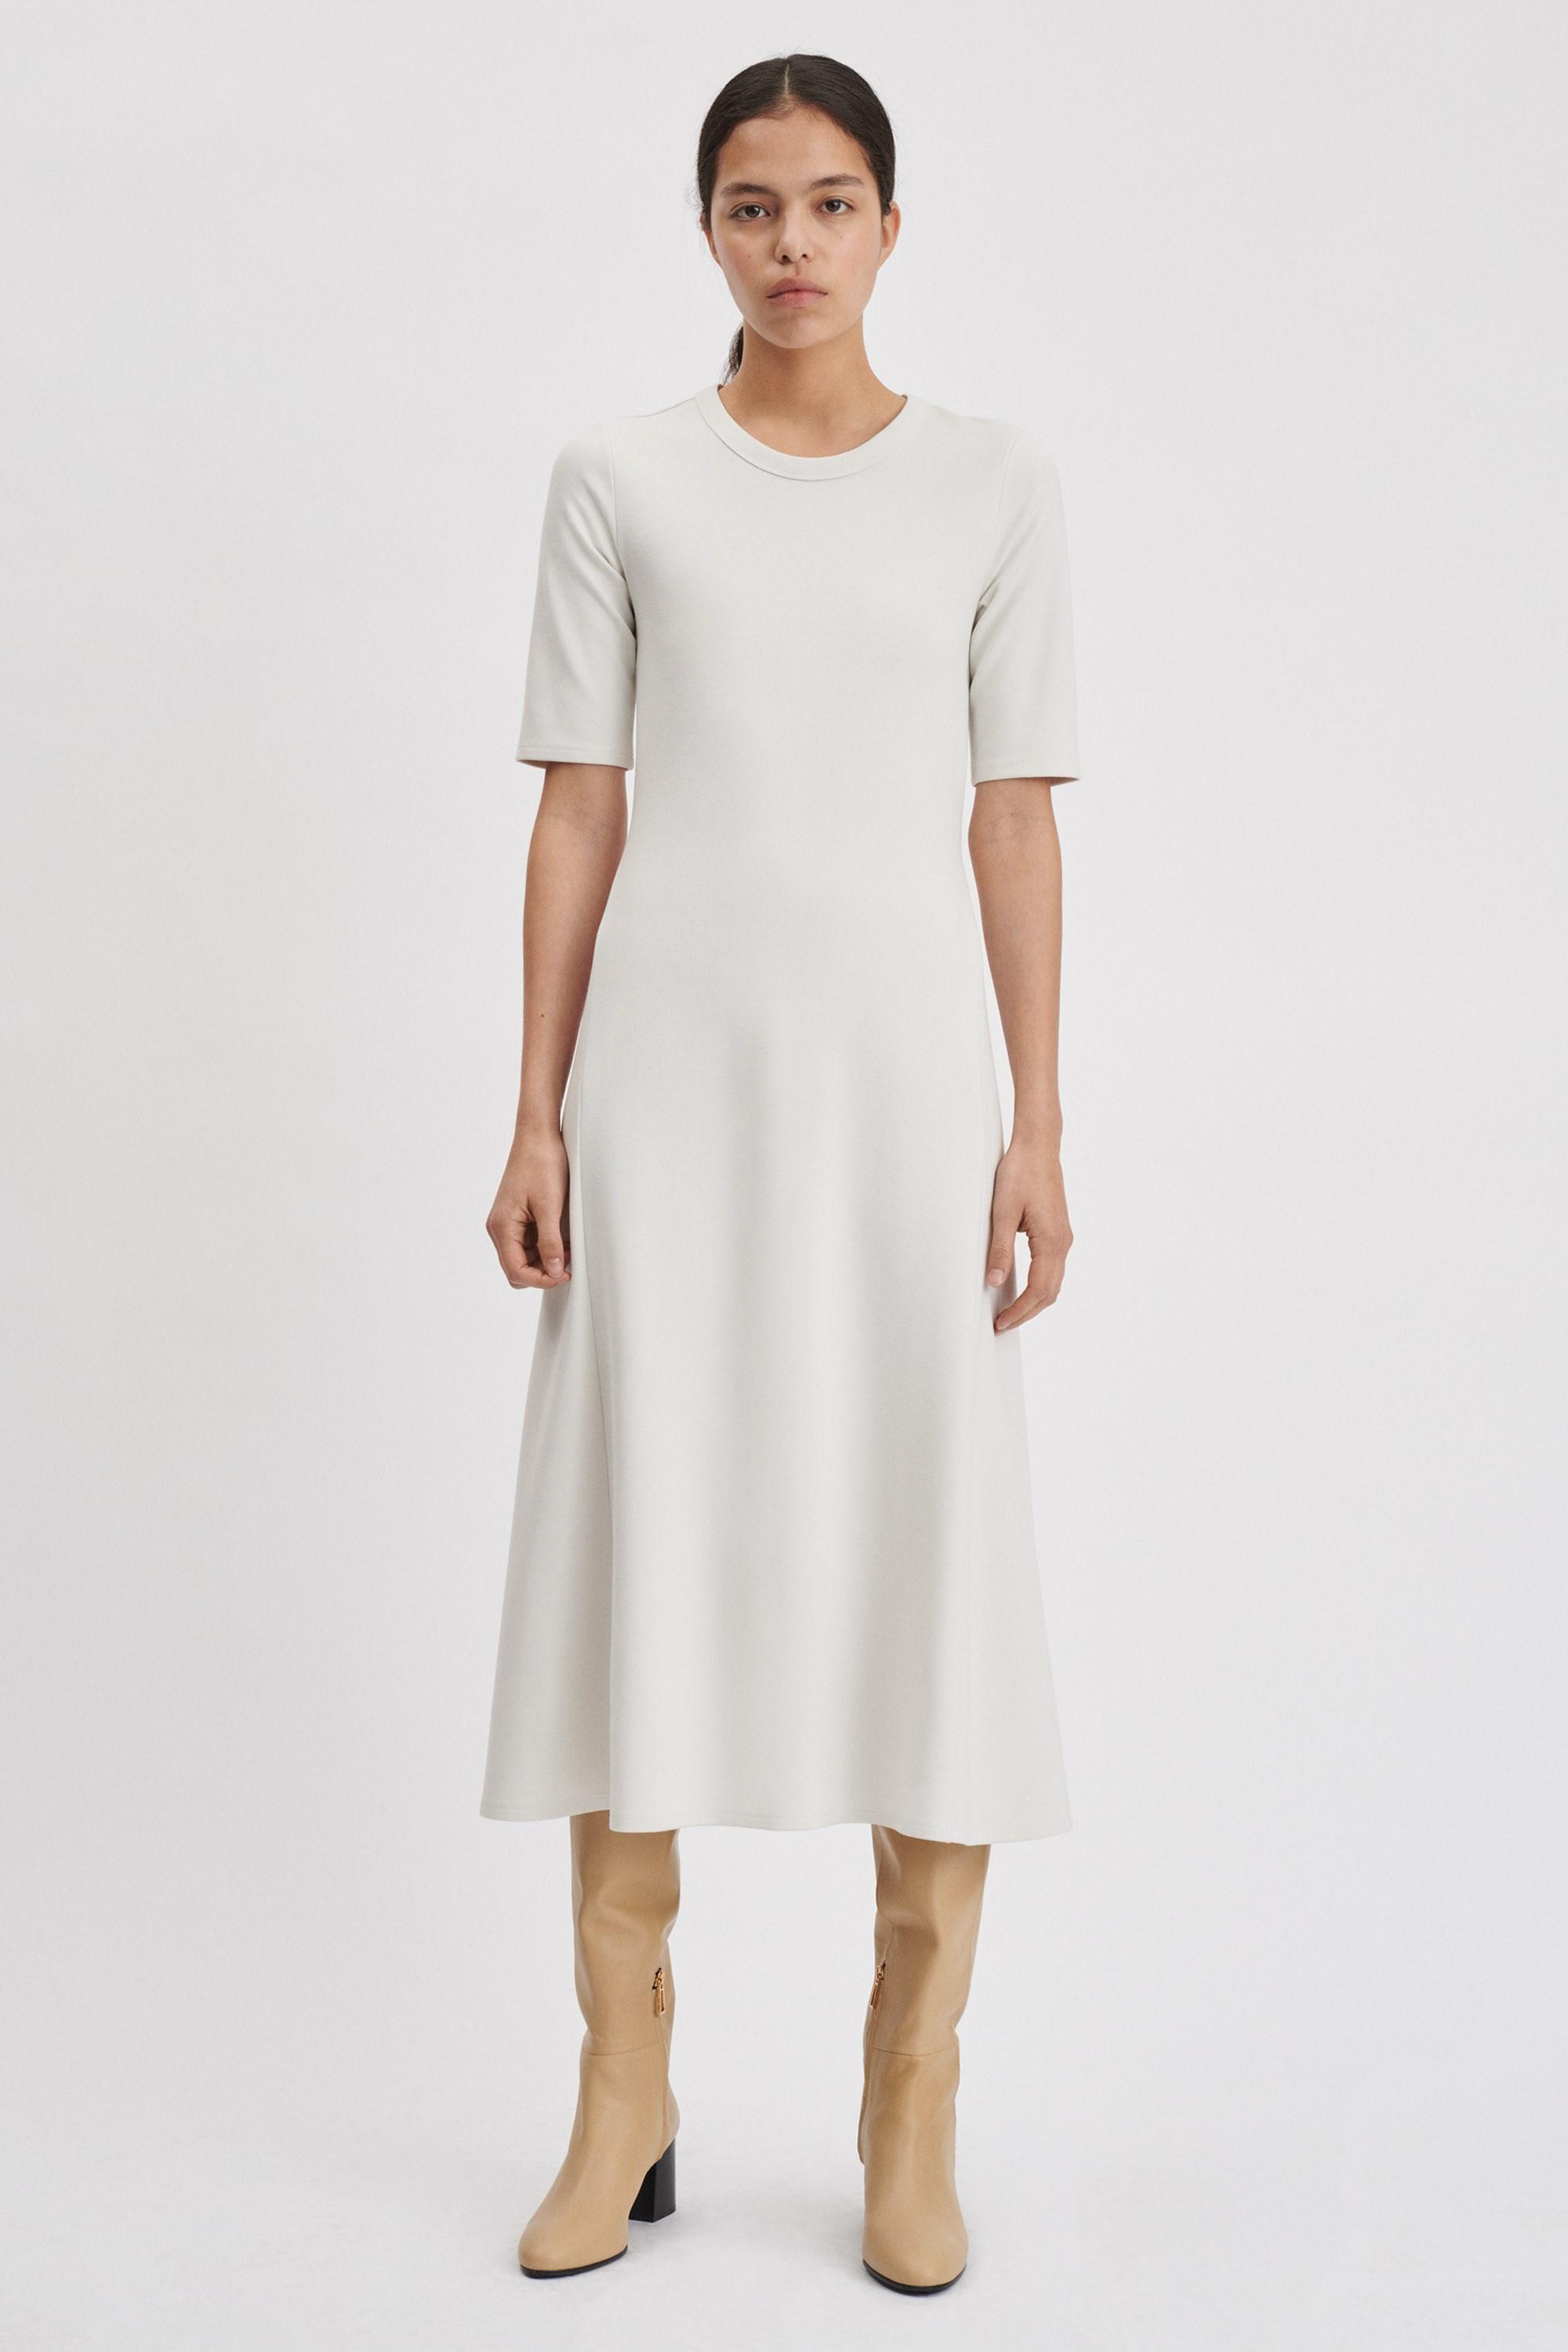 Filippa K Larissa Dress in White - Lyst